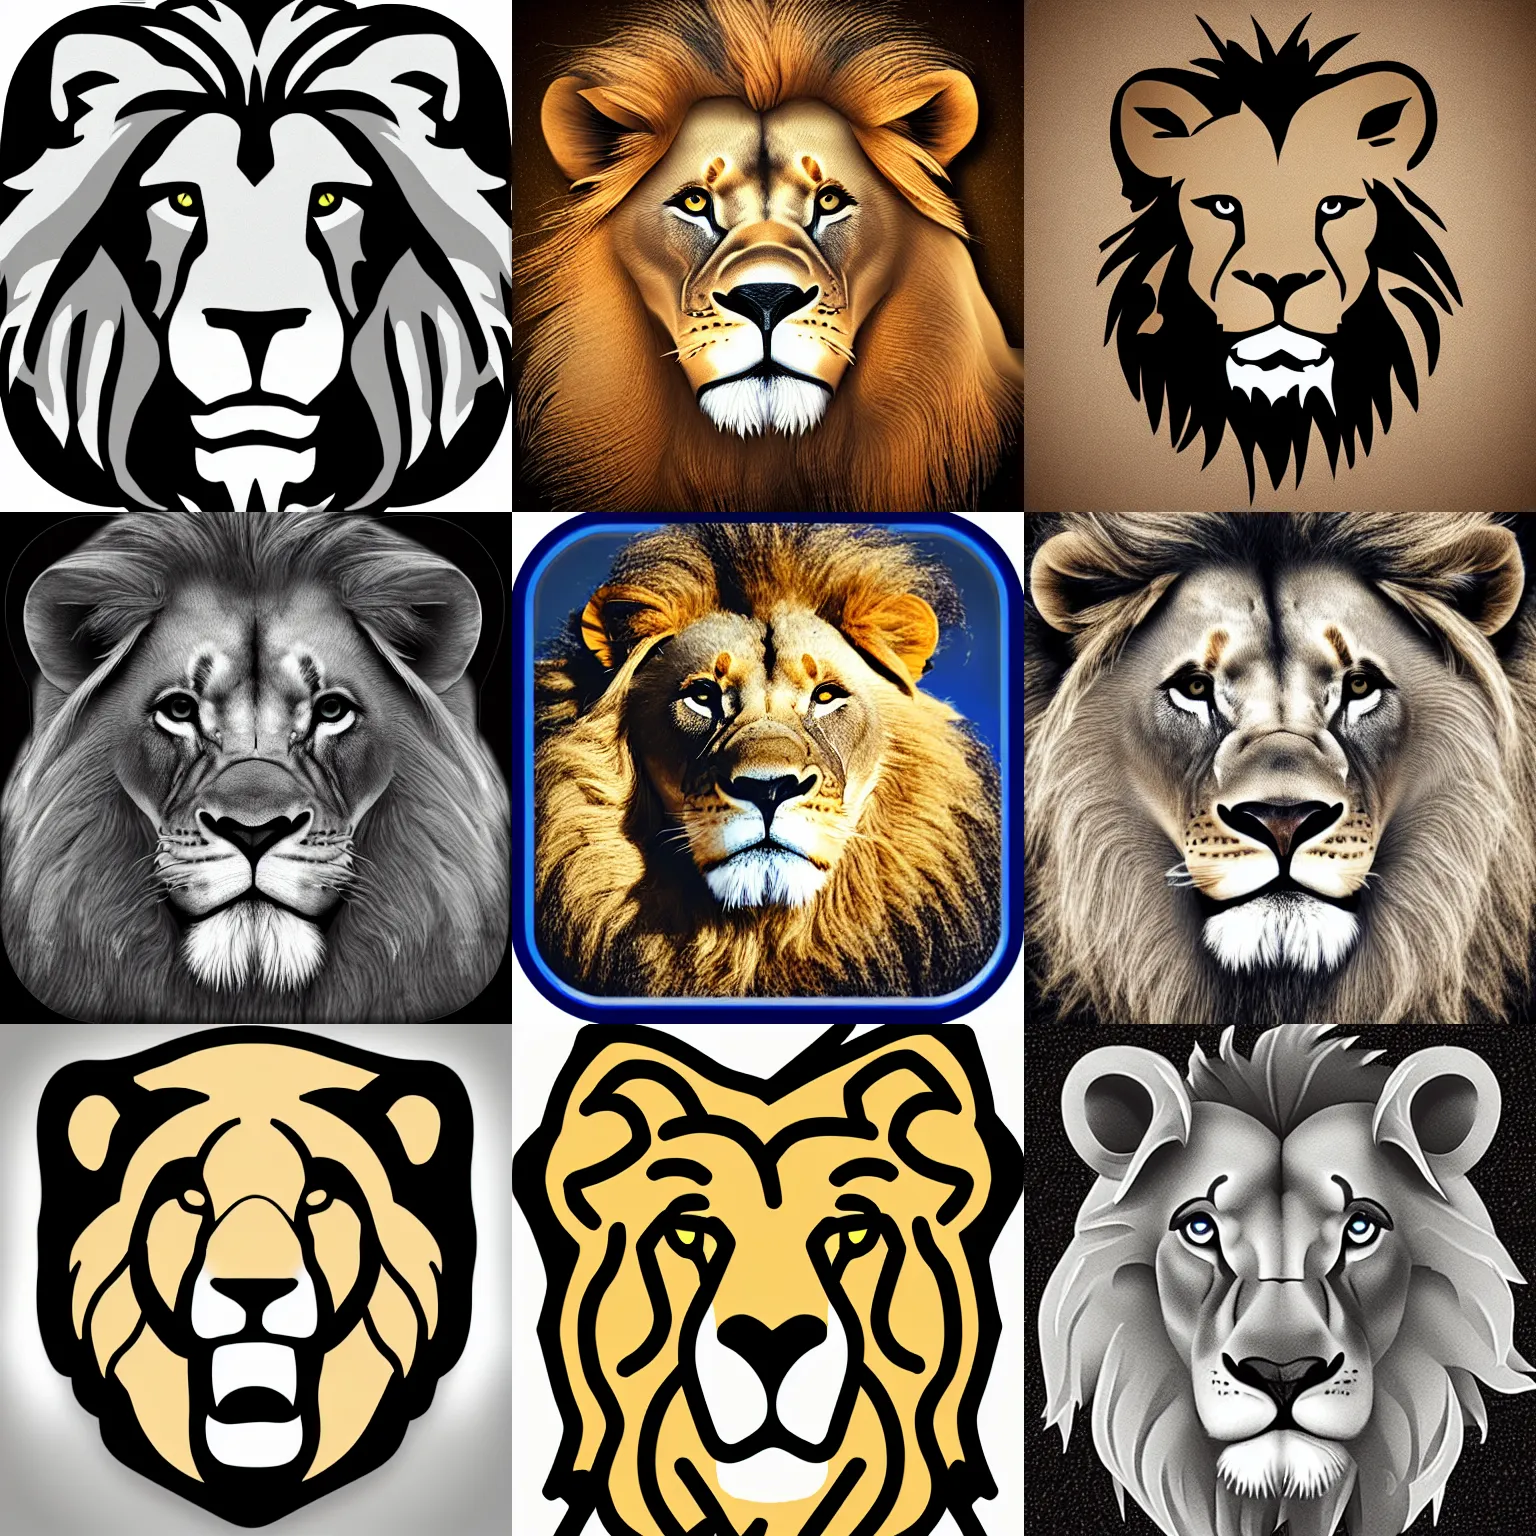 Prompt: lion icon